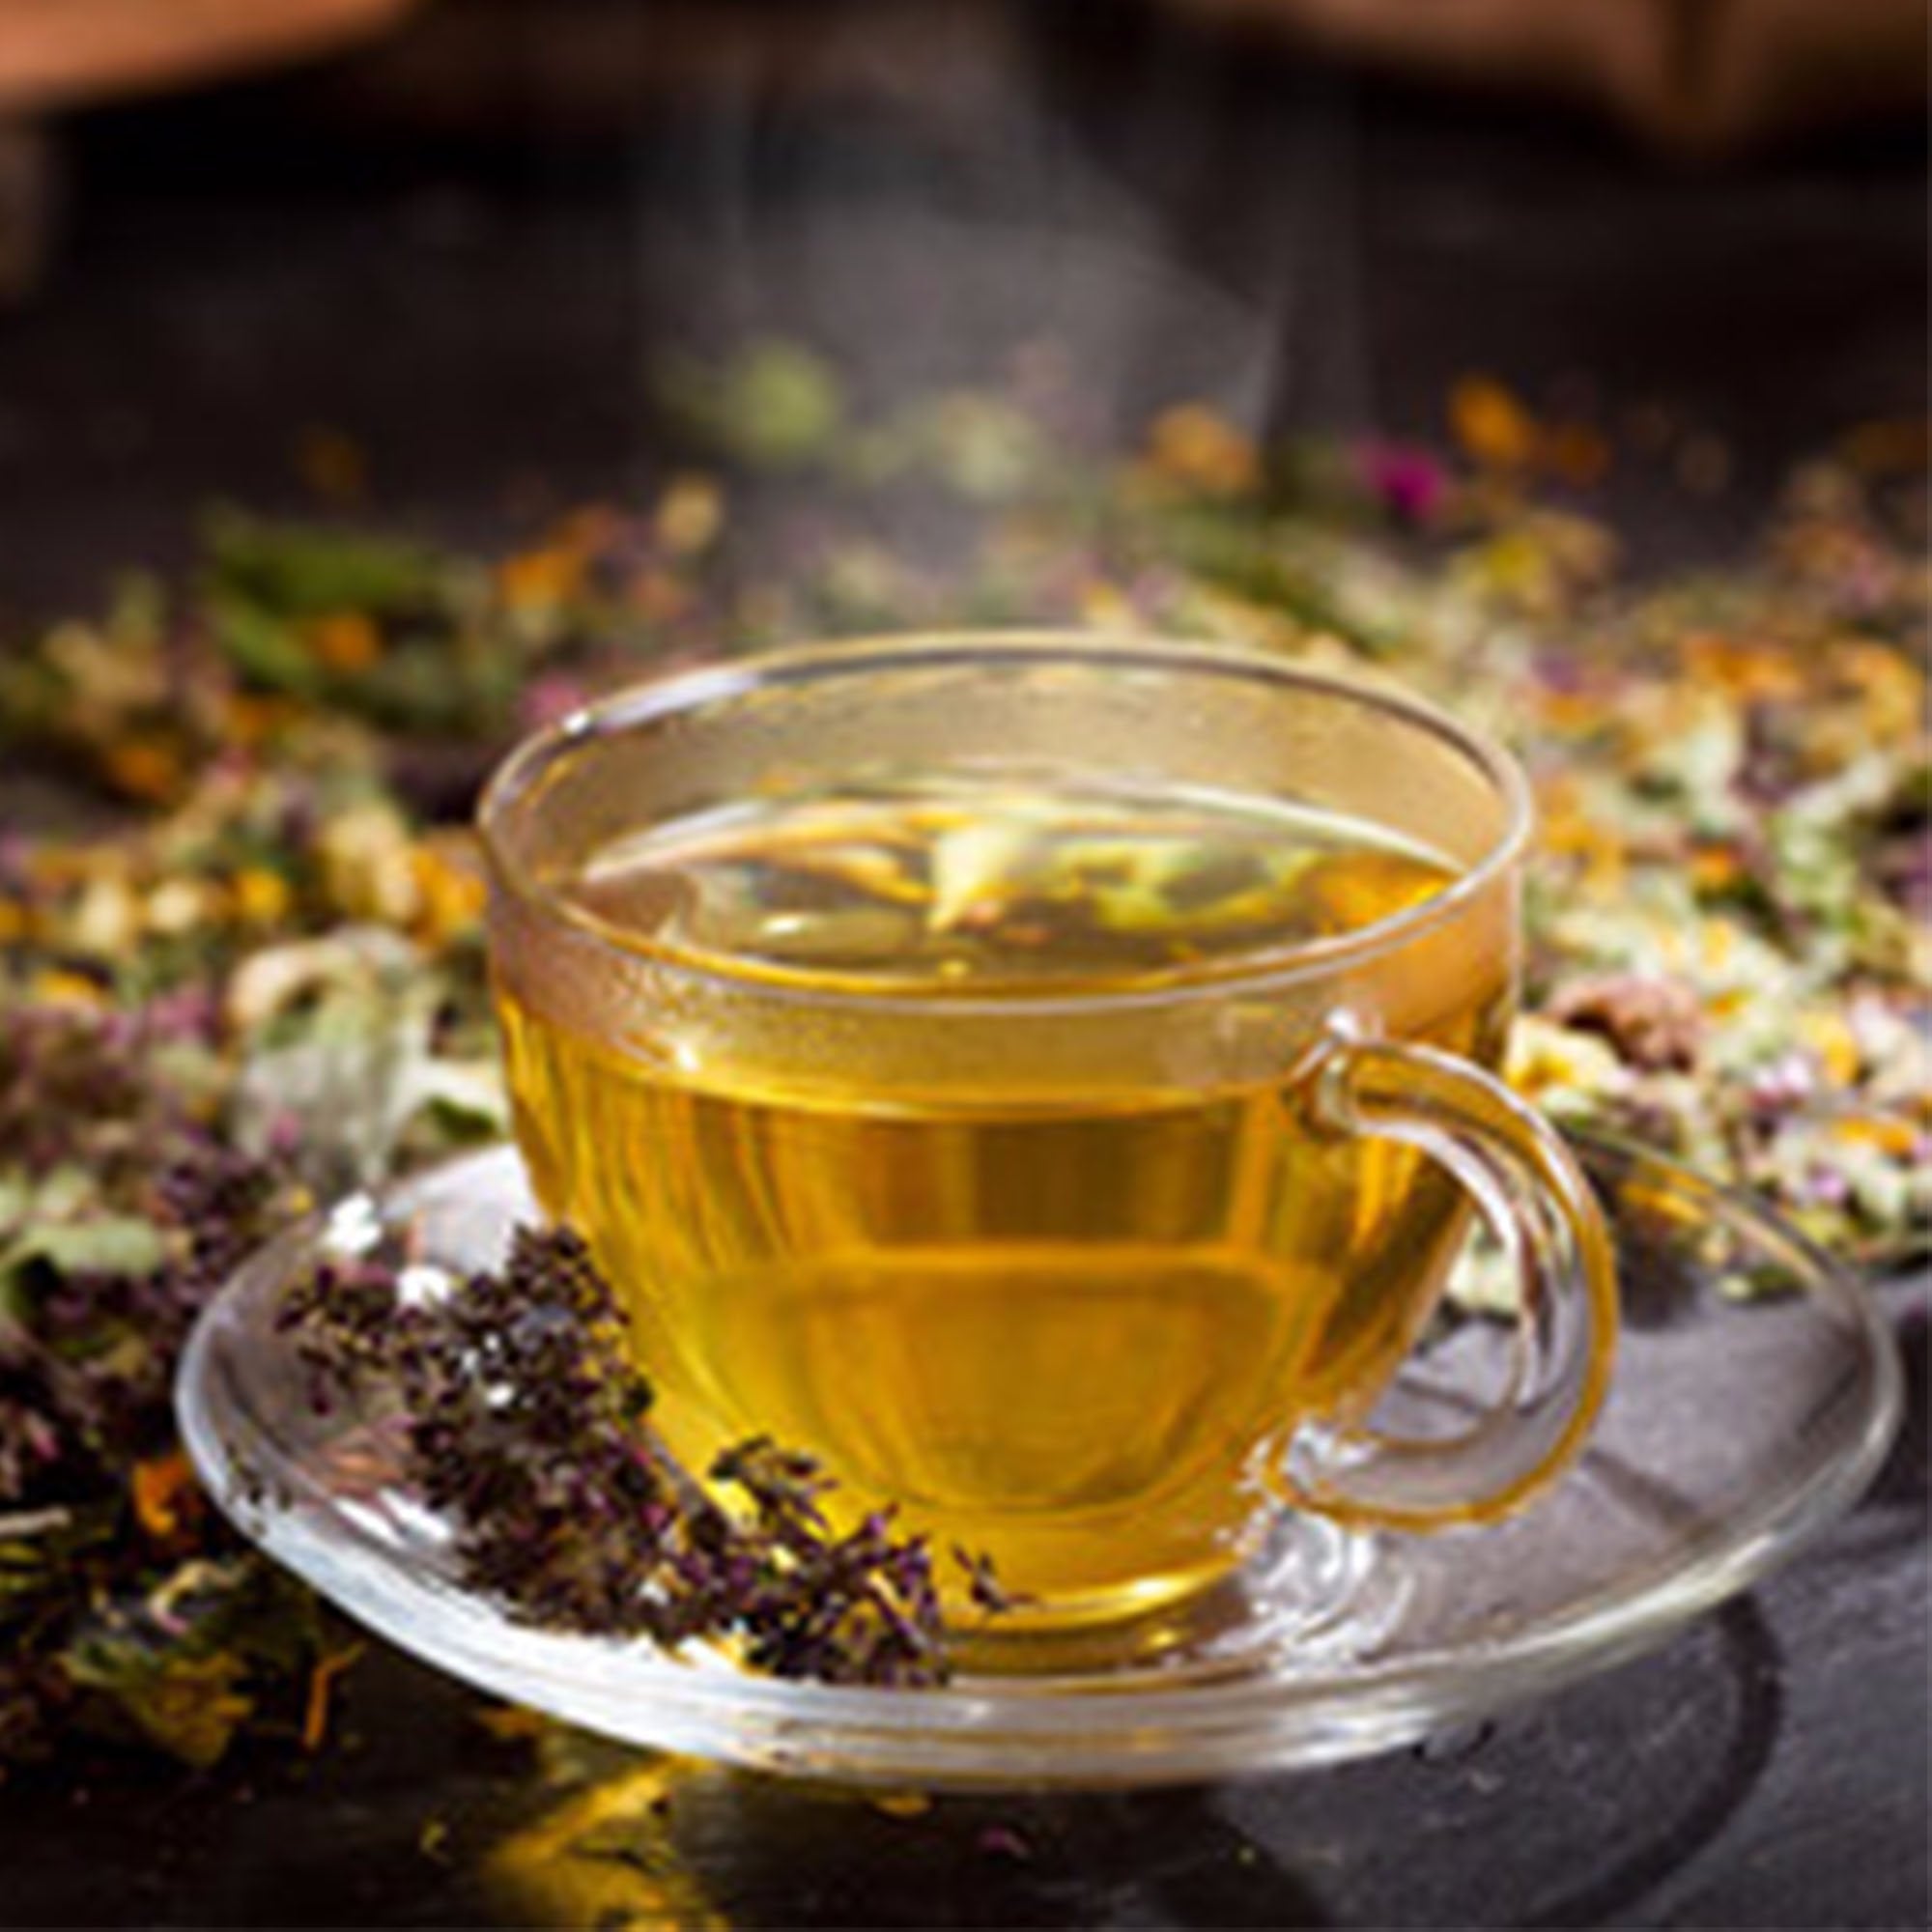 Hibiscus Hibiscus Sabdariffa Organic Dried Flower Herbal Tea